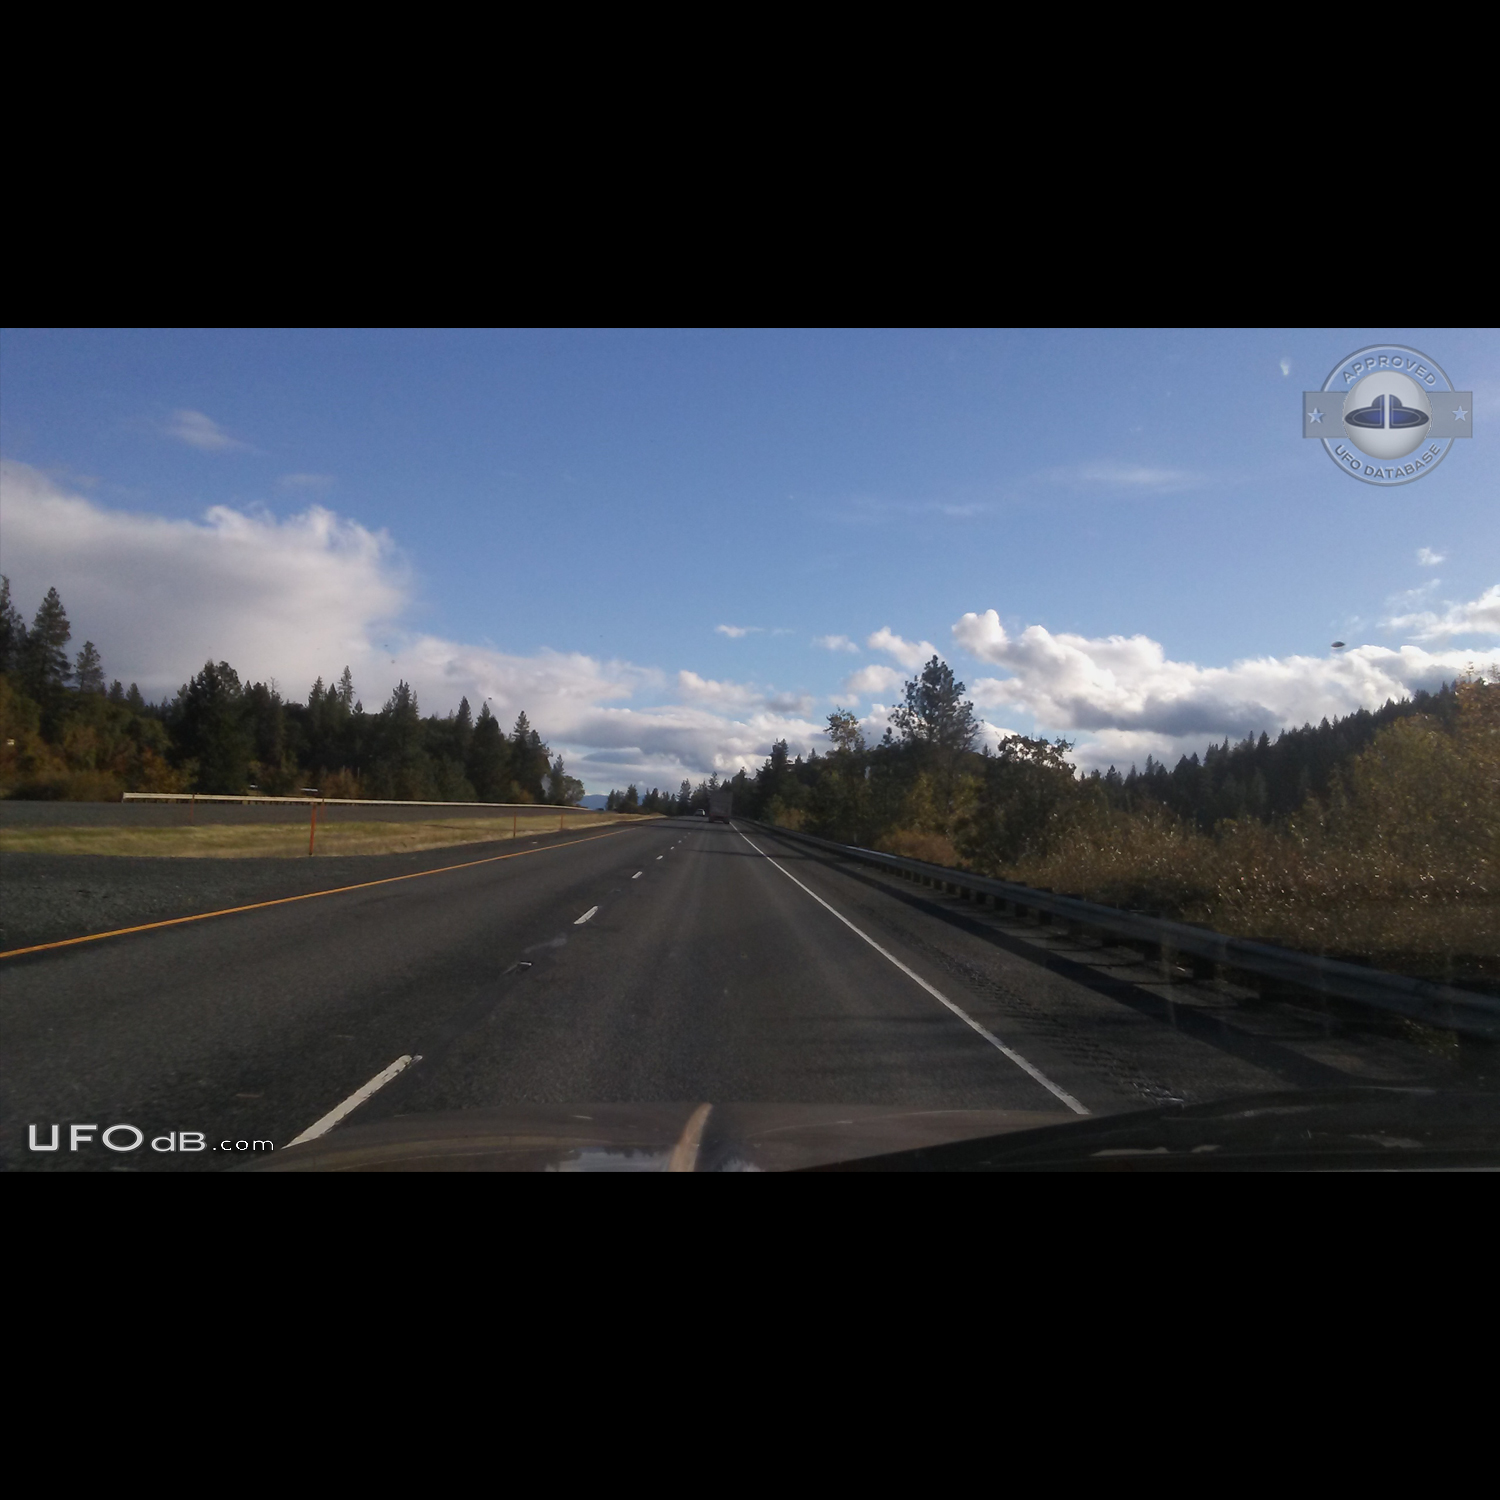 Photos near Grants Pass captured UFO on film - Merlin Oregon USA 2016 UFO Picture #807-1